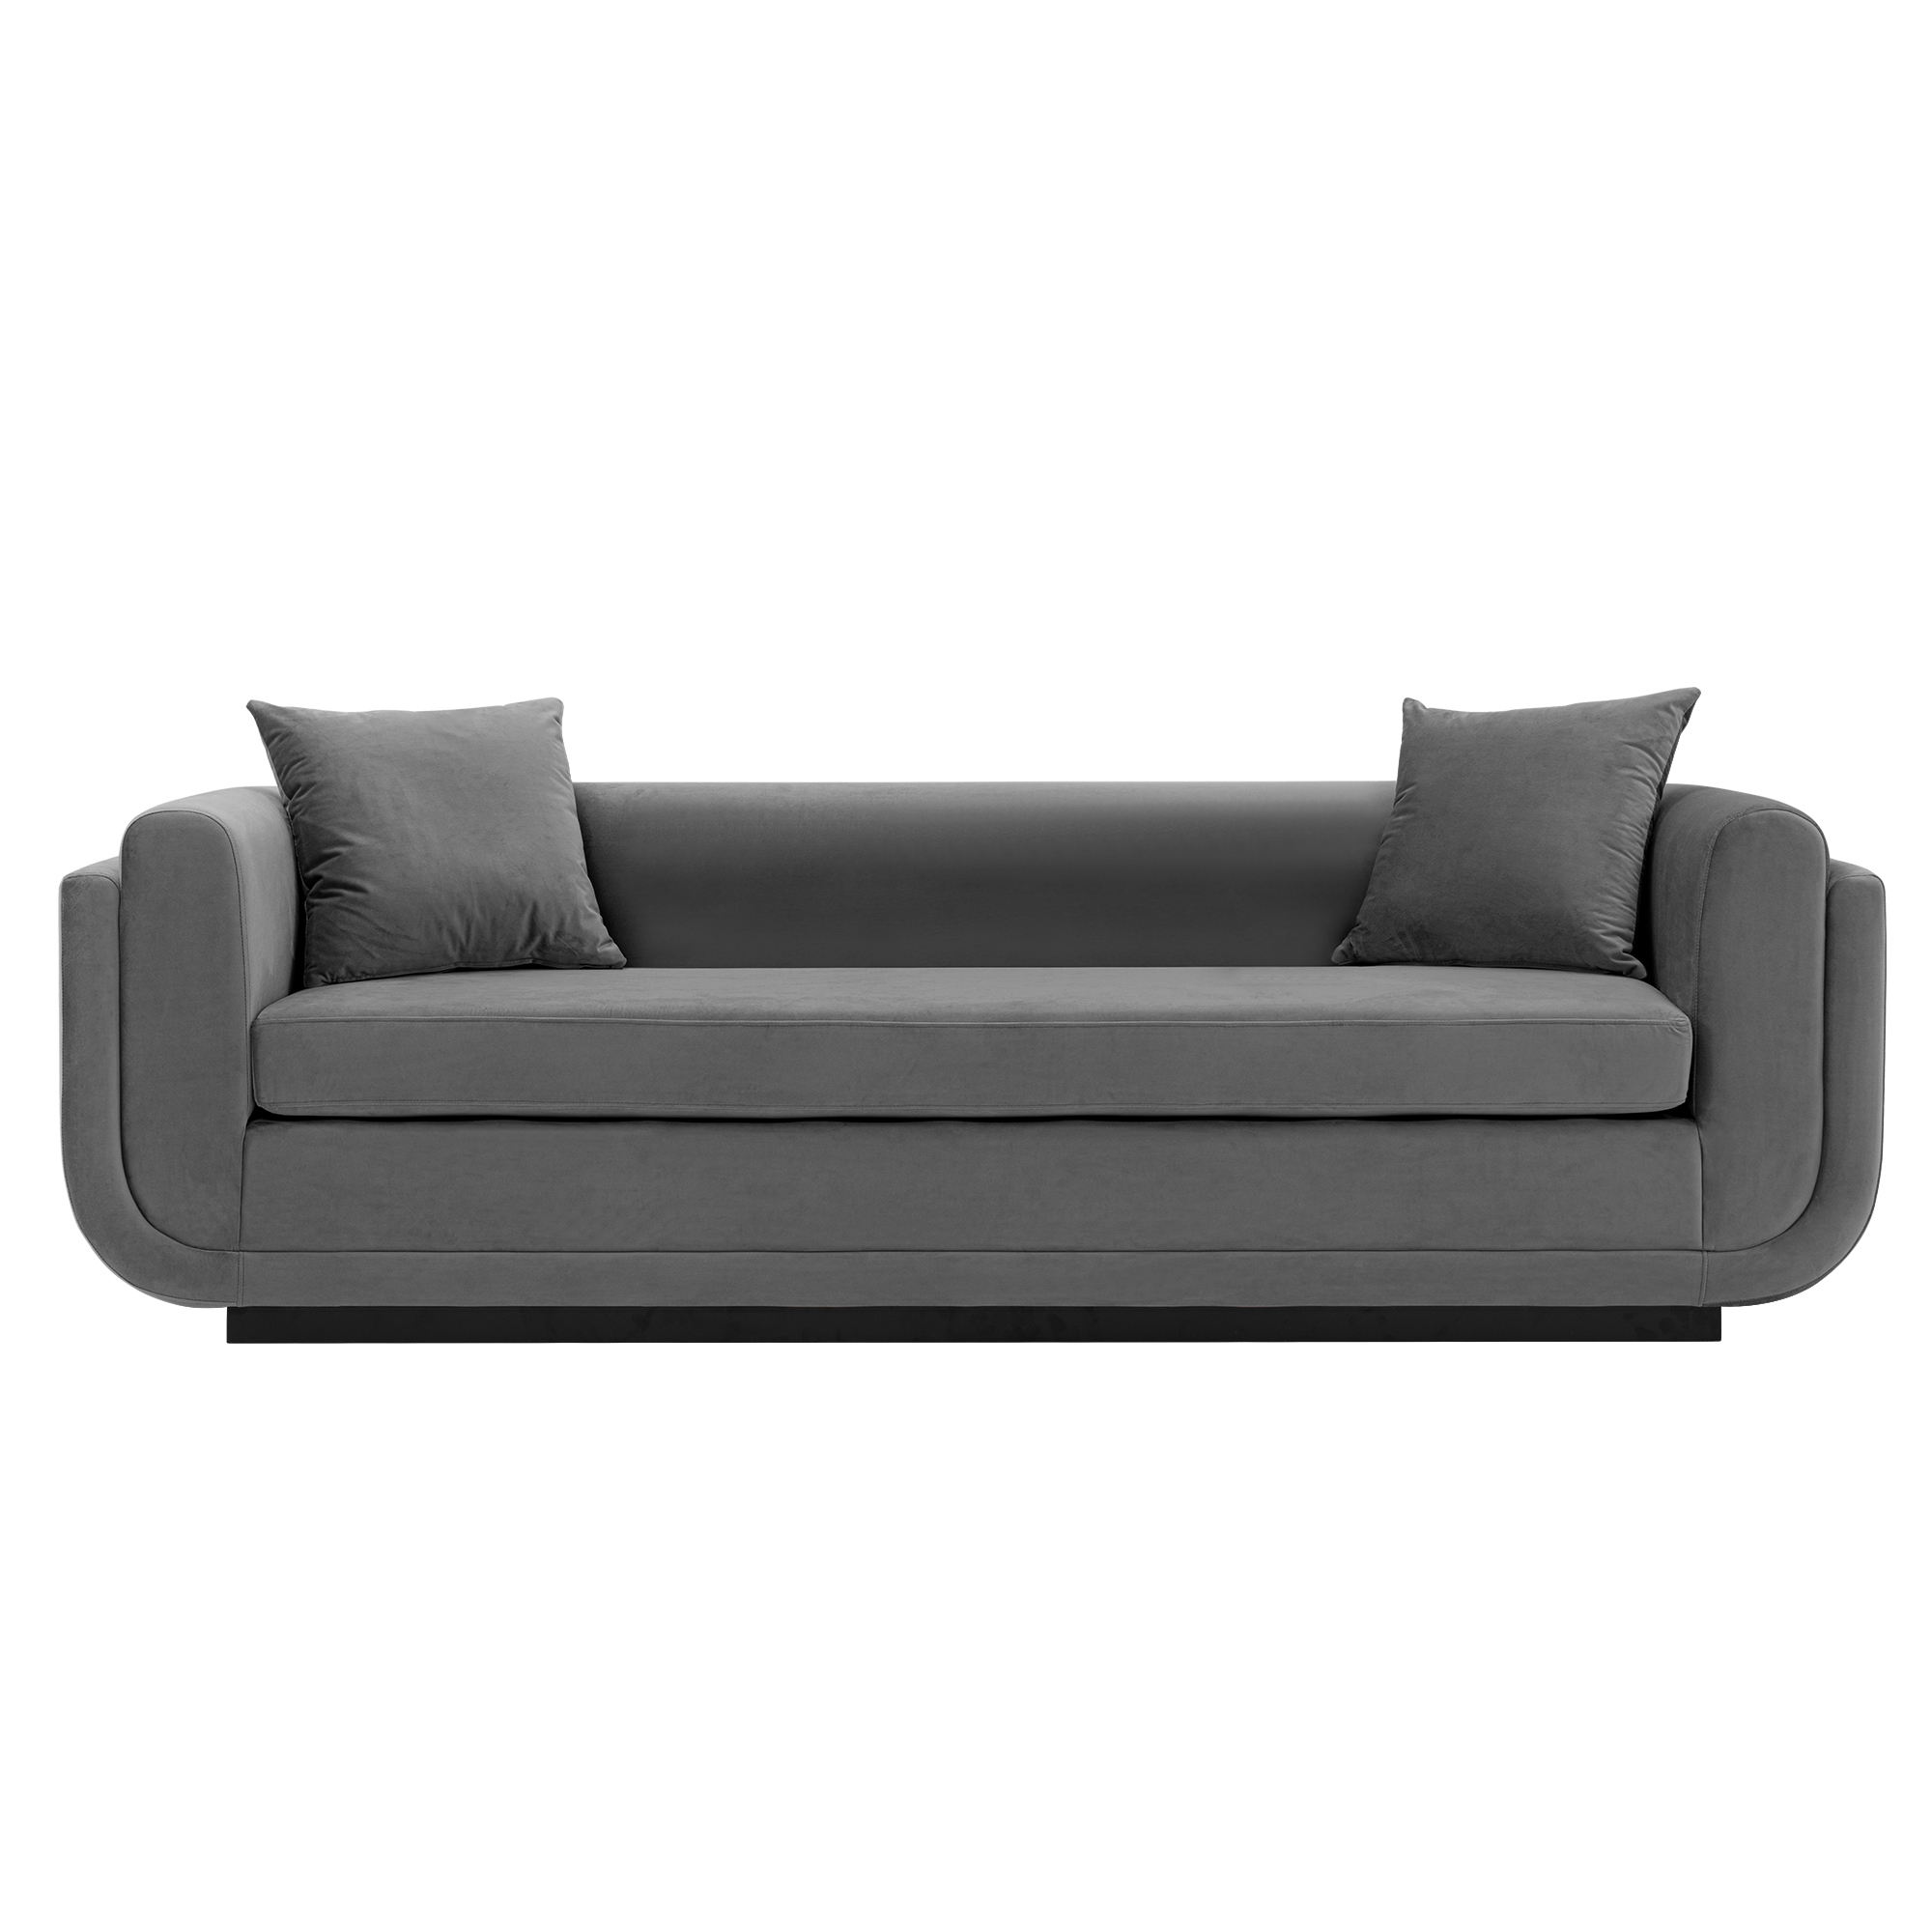 Manhattan Comfort, Contemporary Edmonda Velvet Sofa in Dark Grey, Primary Color Gray, Included (qty.) 1 Model SF014